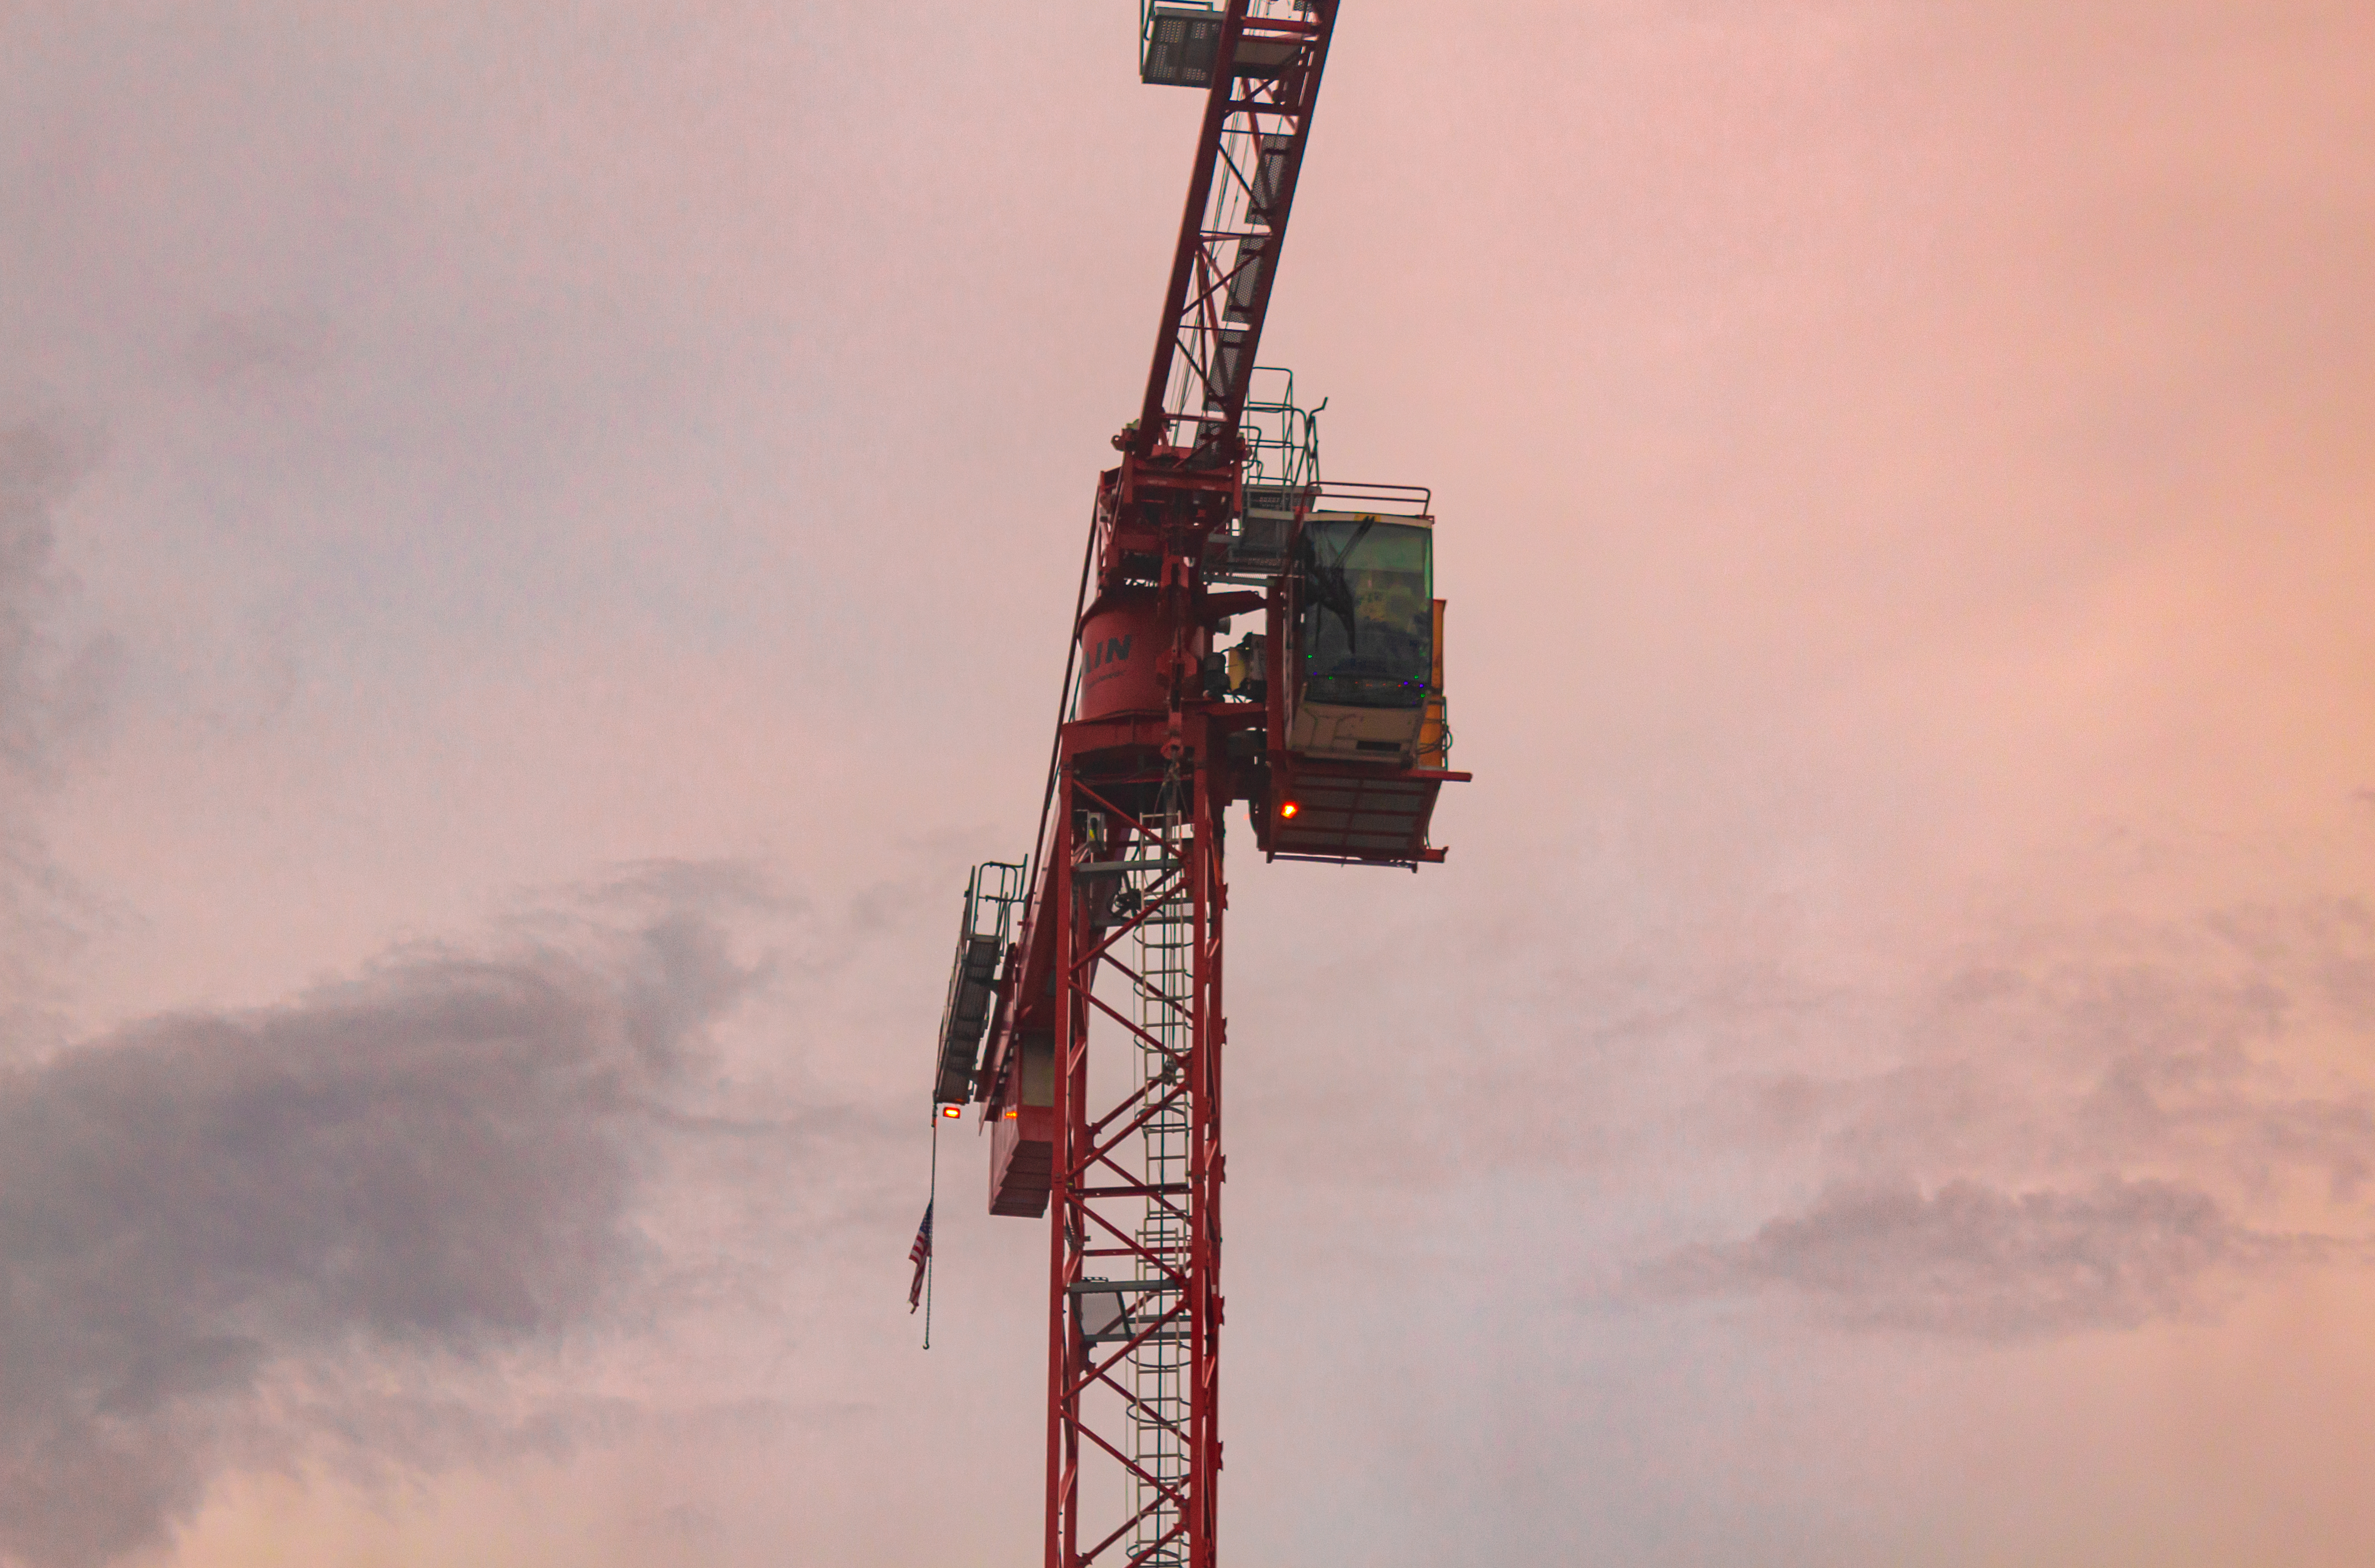 construction crane at sunset after a storm.